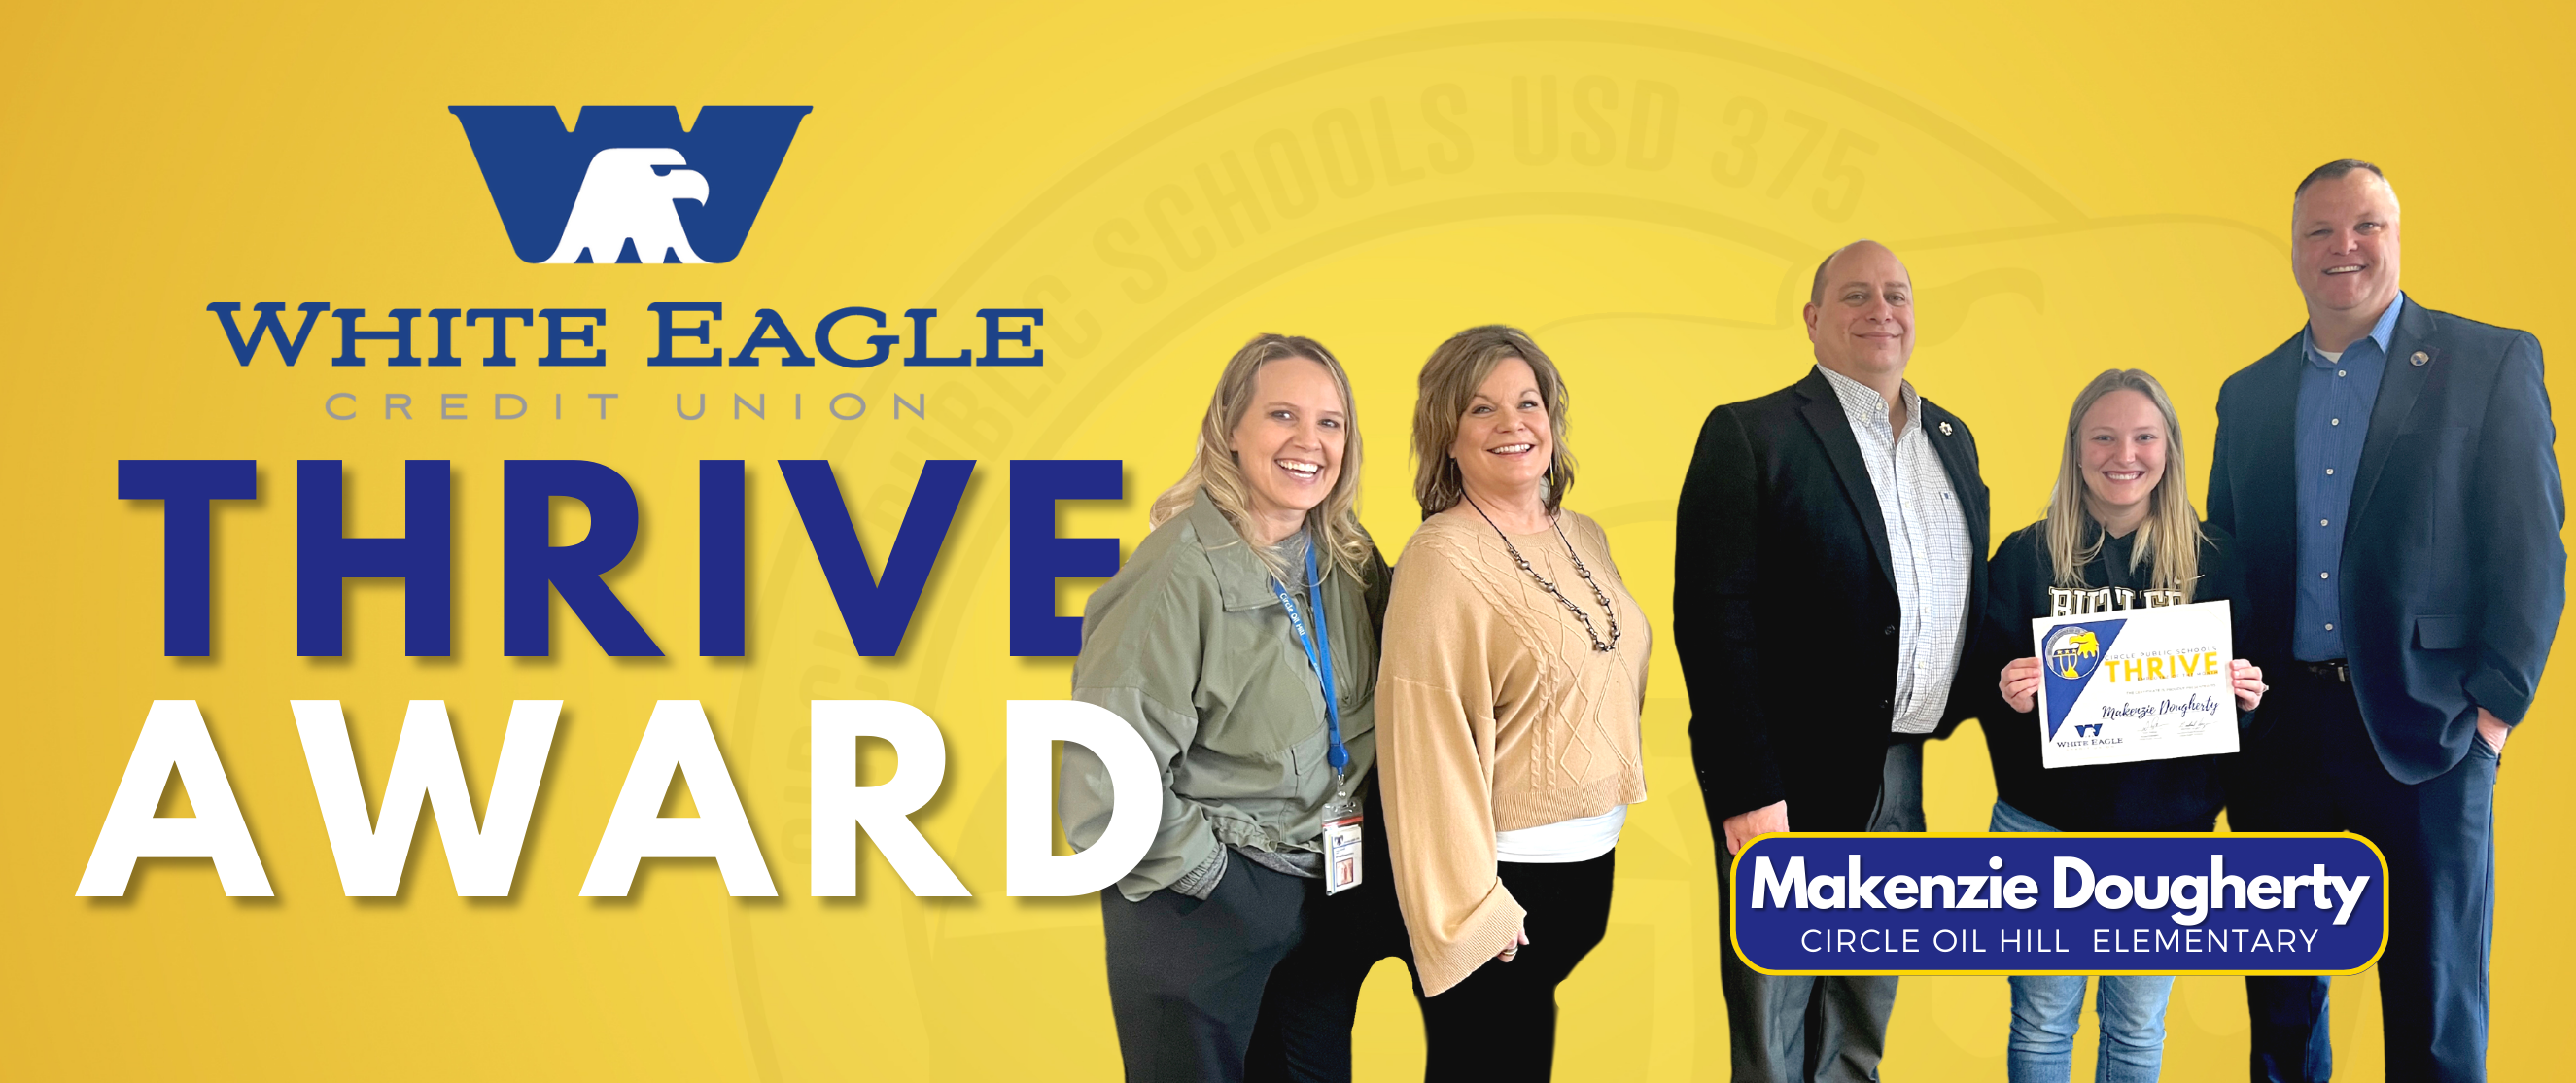 White Eagle Credit Union THRIVE Award, Makenzie Dougherty